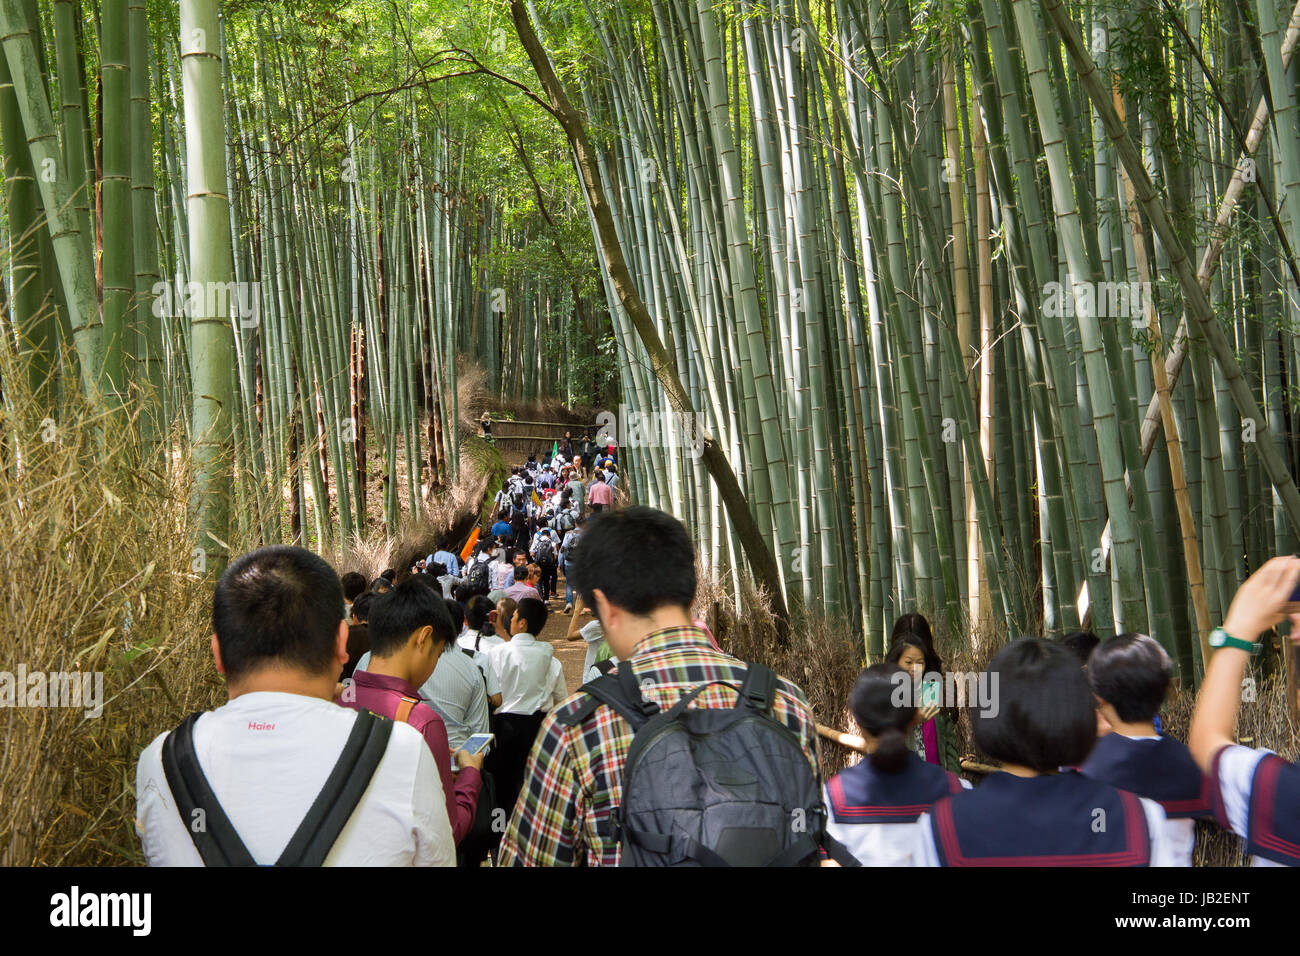 Tourists In Bamboo Forest In Arashiyama Kyoto Japan Stock Photo Alamy